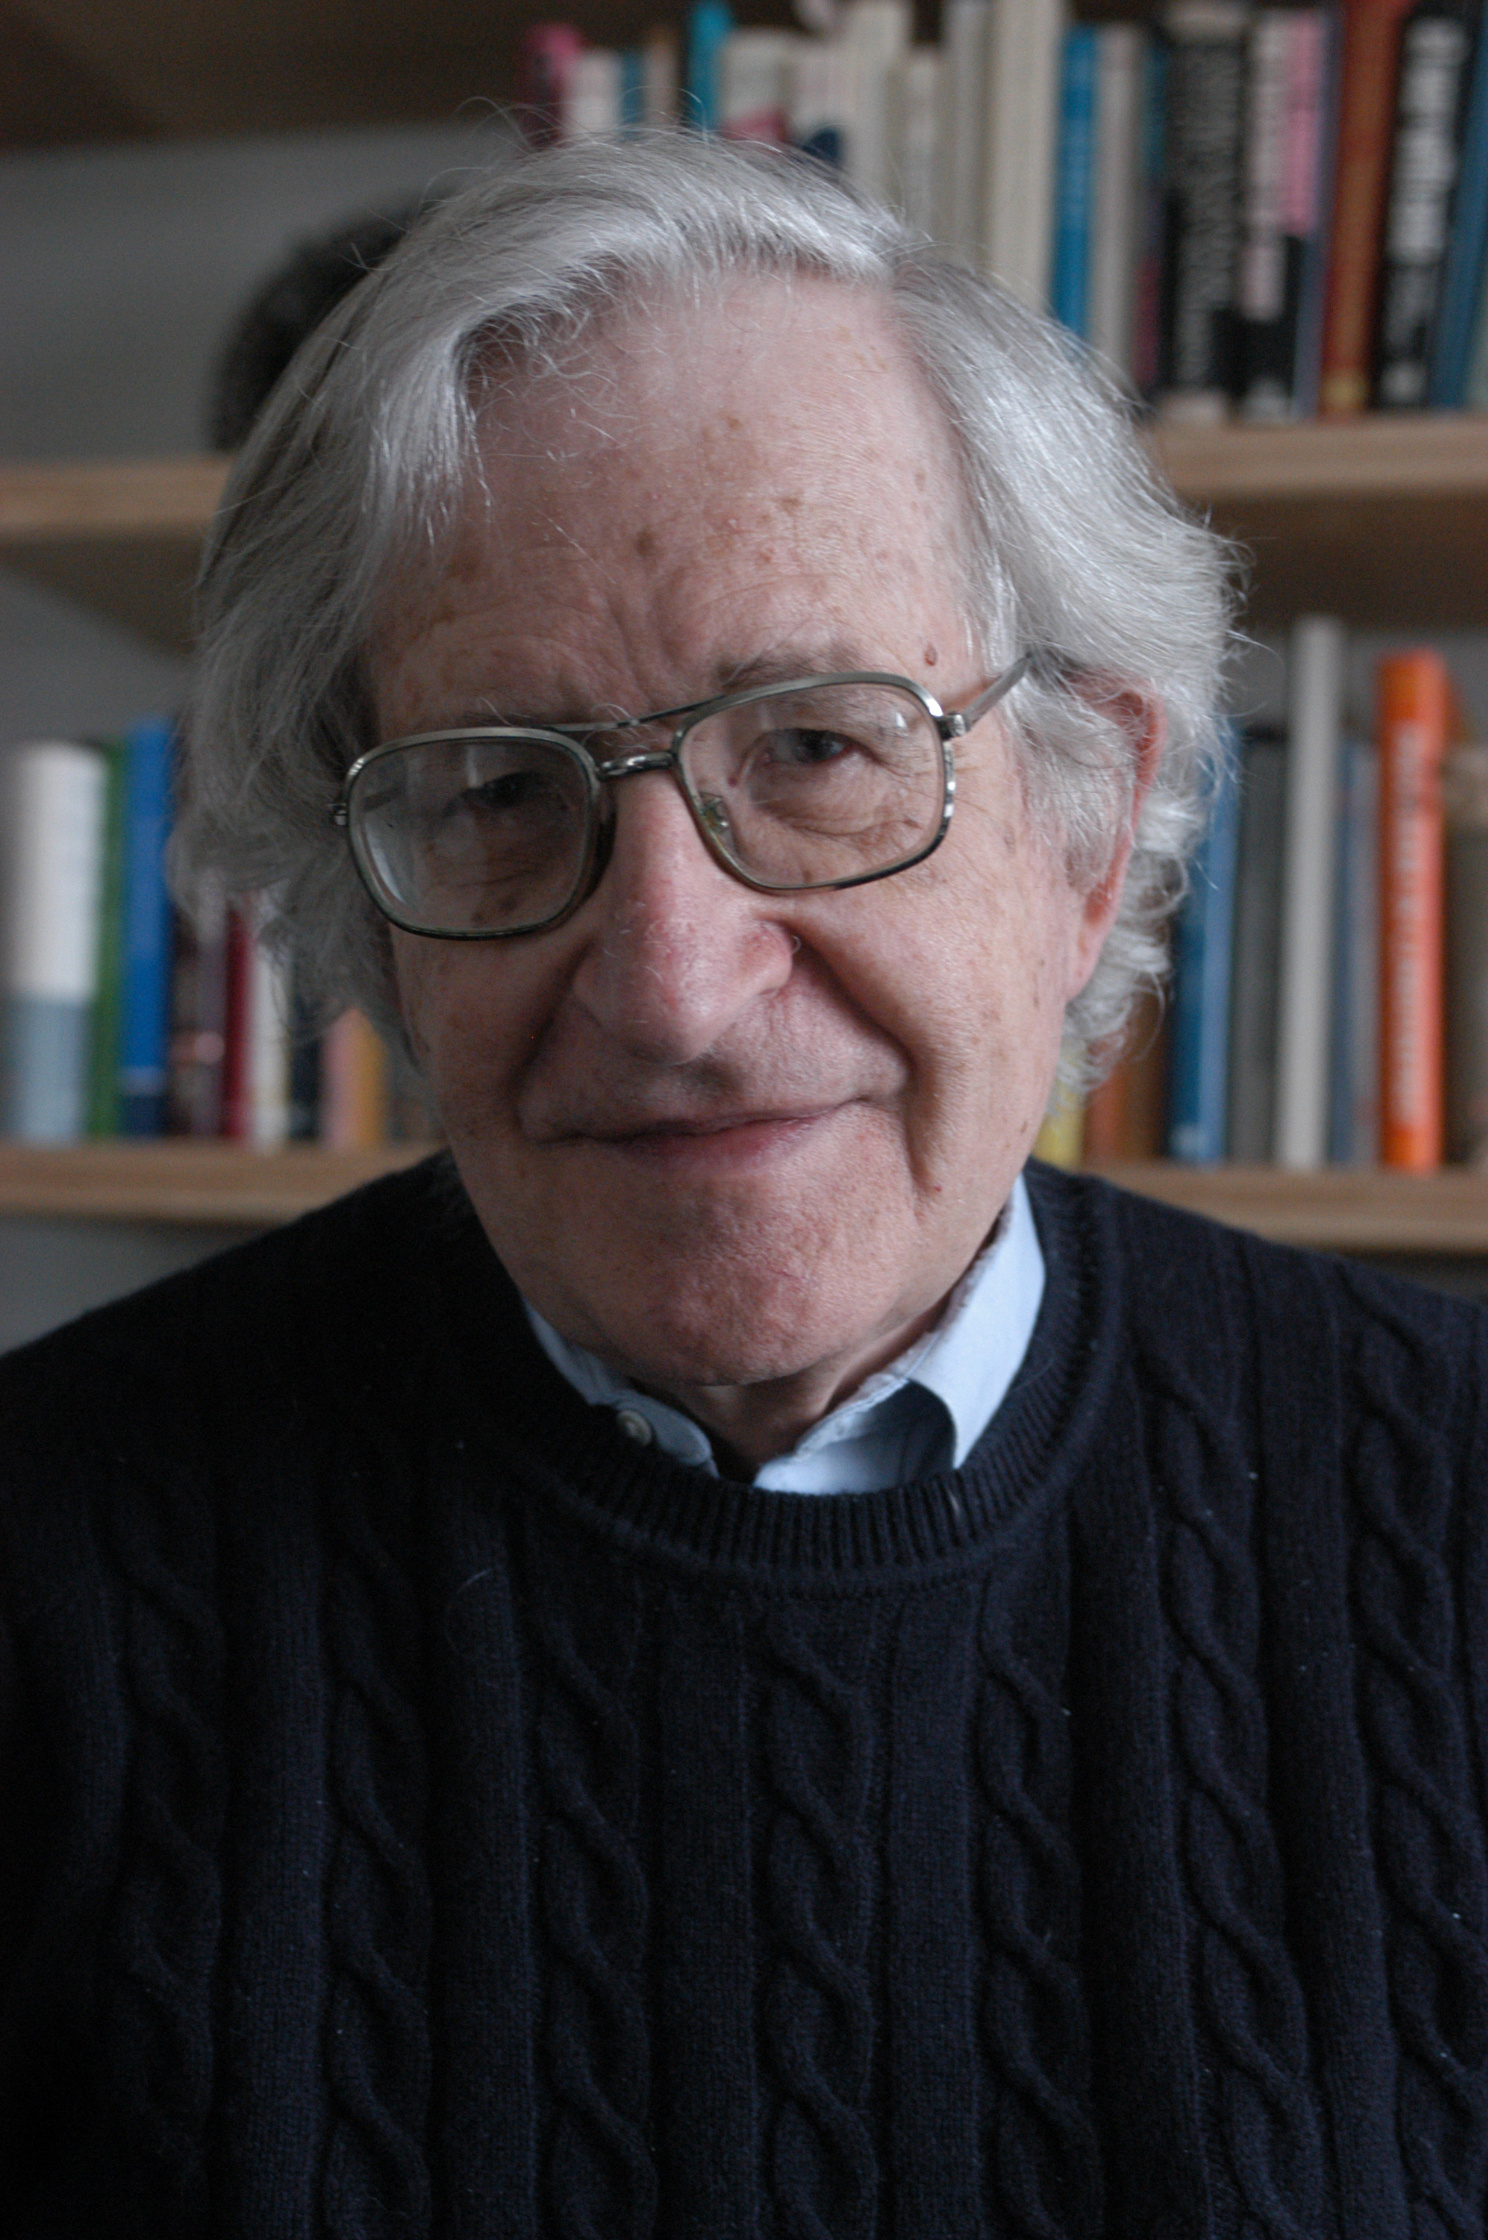 Portrait von Noam Chomsky